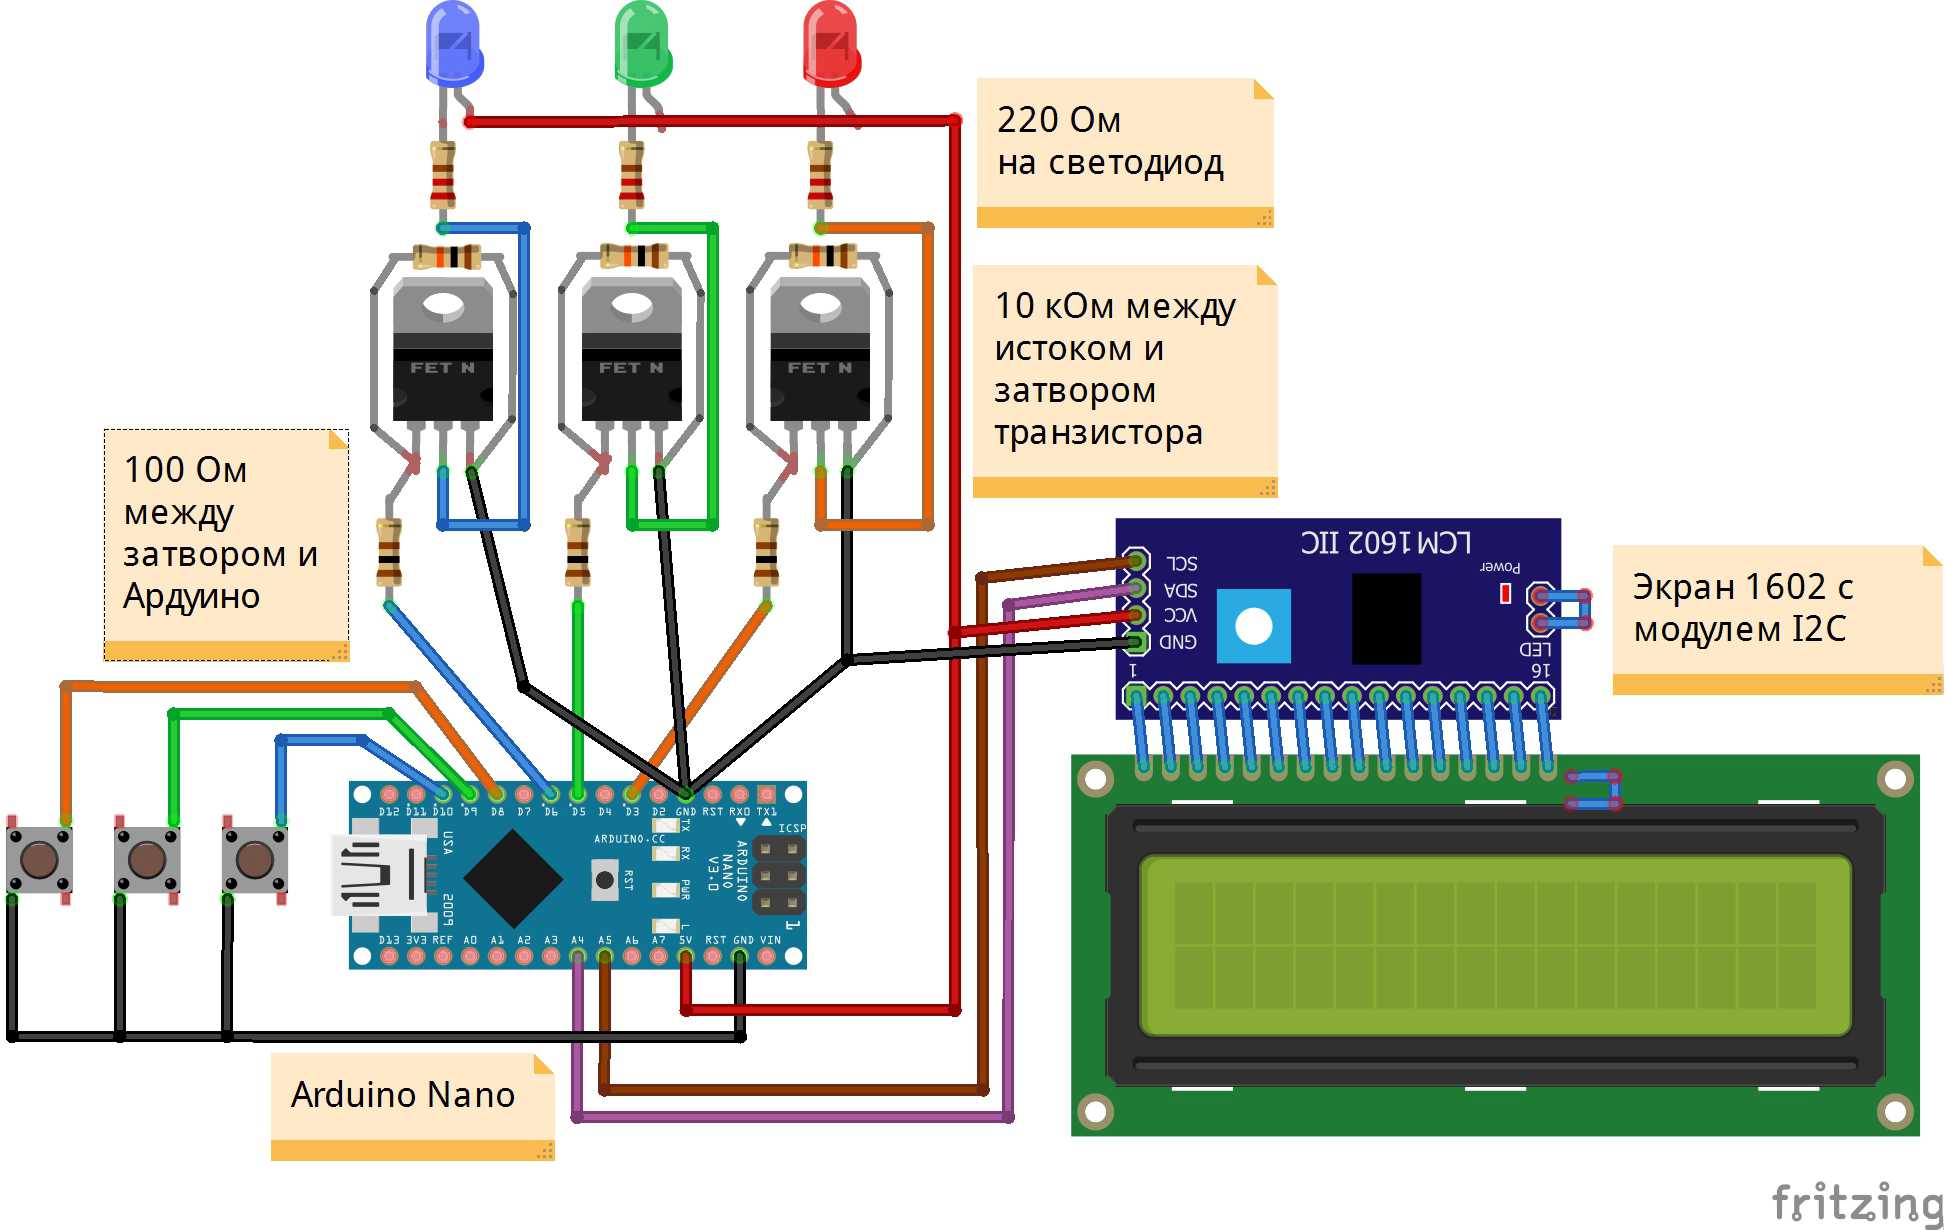 Https arduino cc. Светодиод ардуино схема. Схема ардуино уно с светодиодами. Ардуино нано светодиод. Ардуино уно схема подключения.